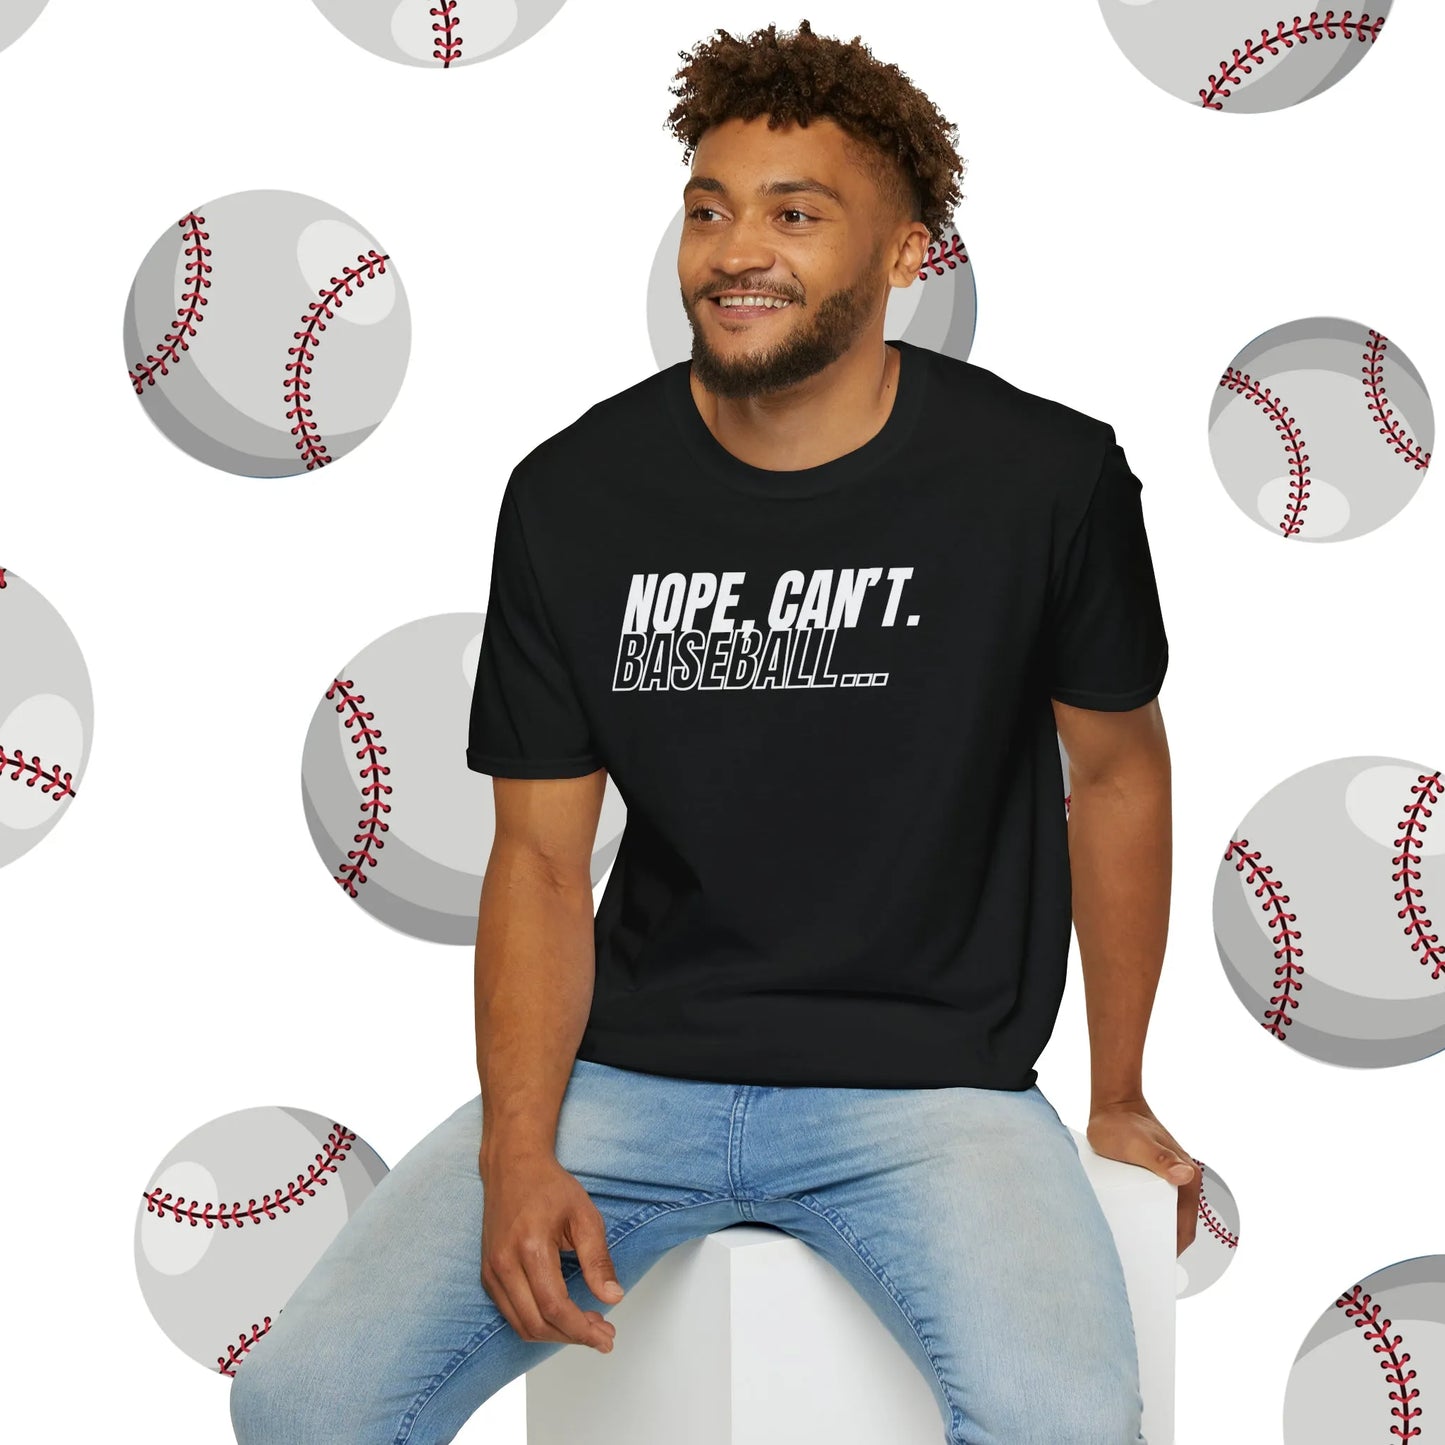 Nope, Can't. Baseball... Tshirt - Funny Baseball Shirt - Nope Can't Baseball Shirt Male Model 